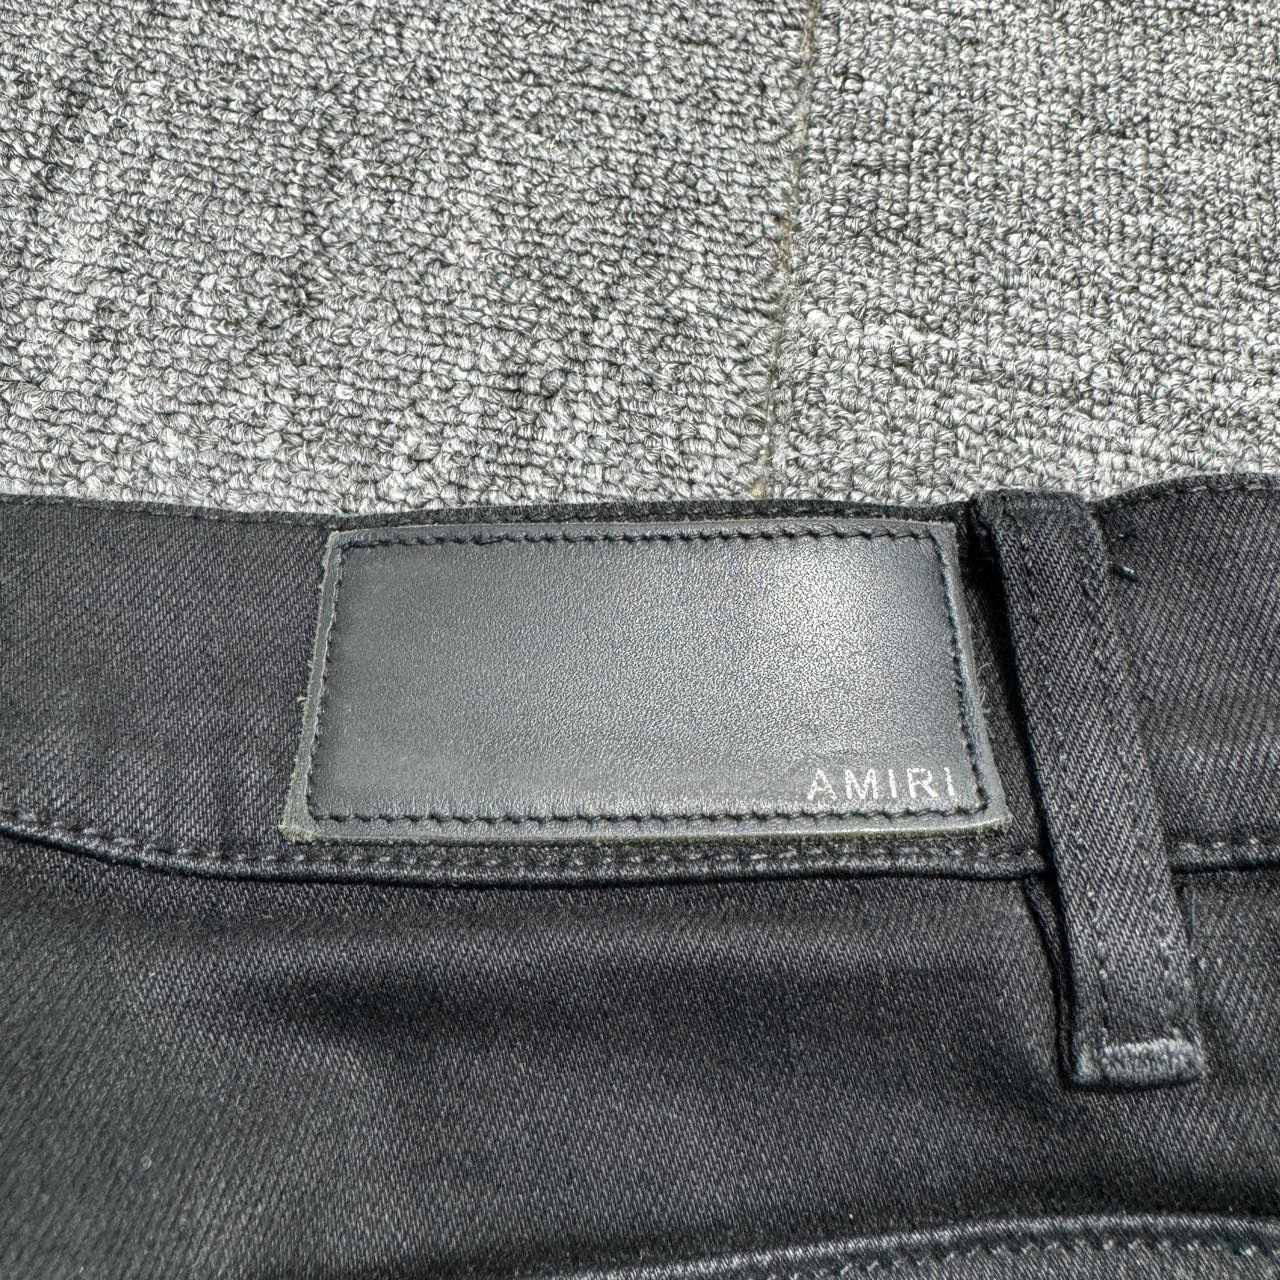 Amiri Black Large Distressed Denim Jeans - 5